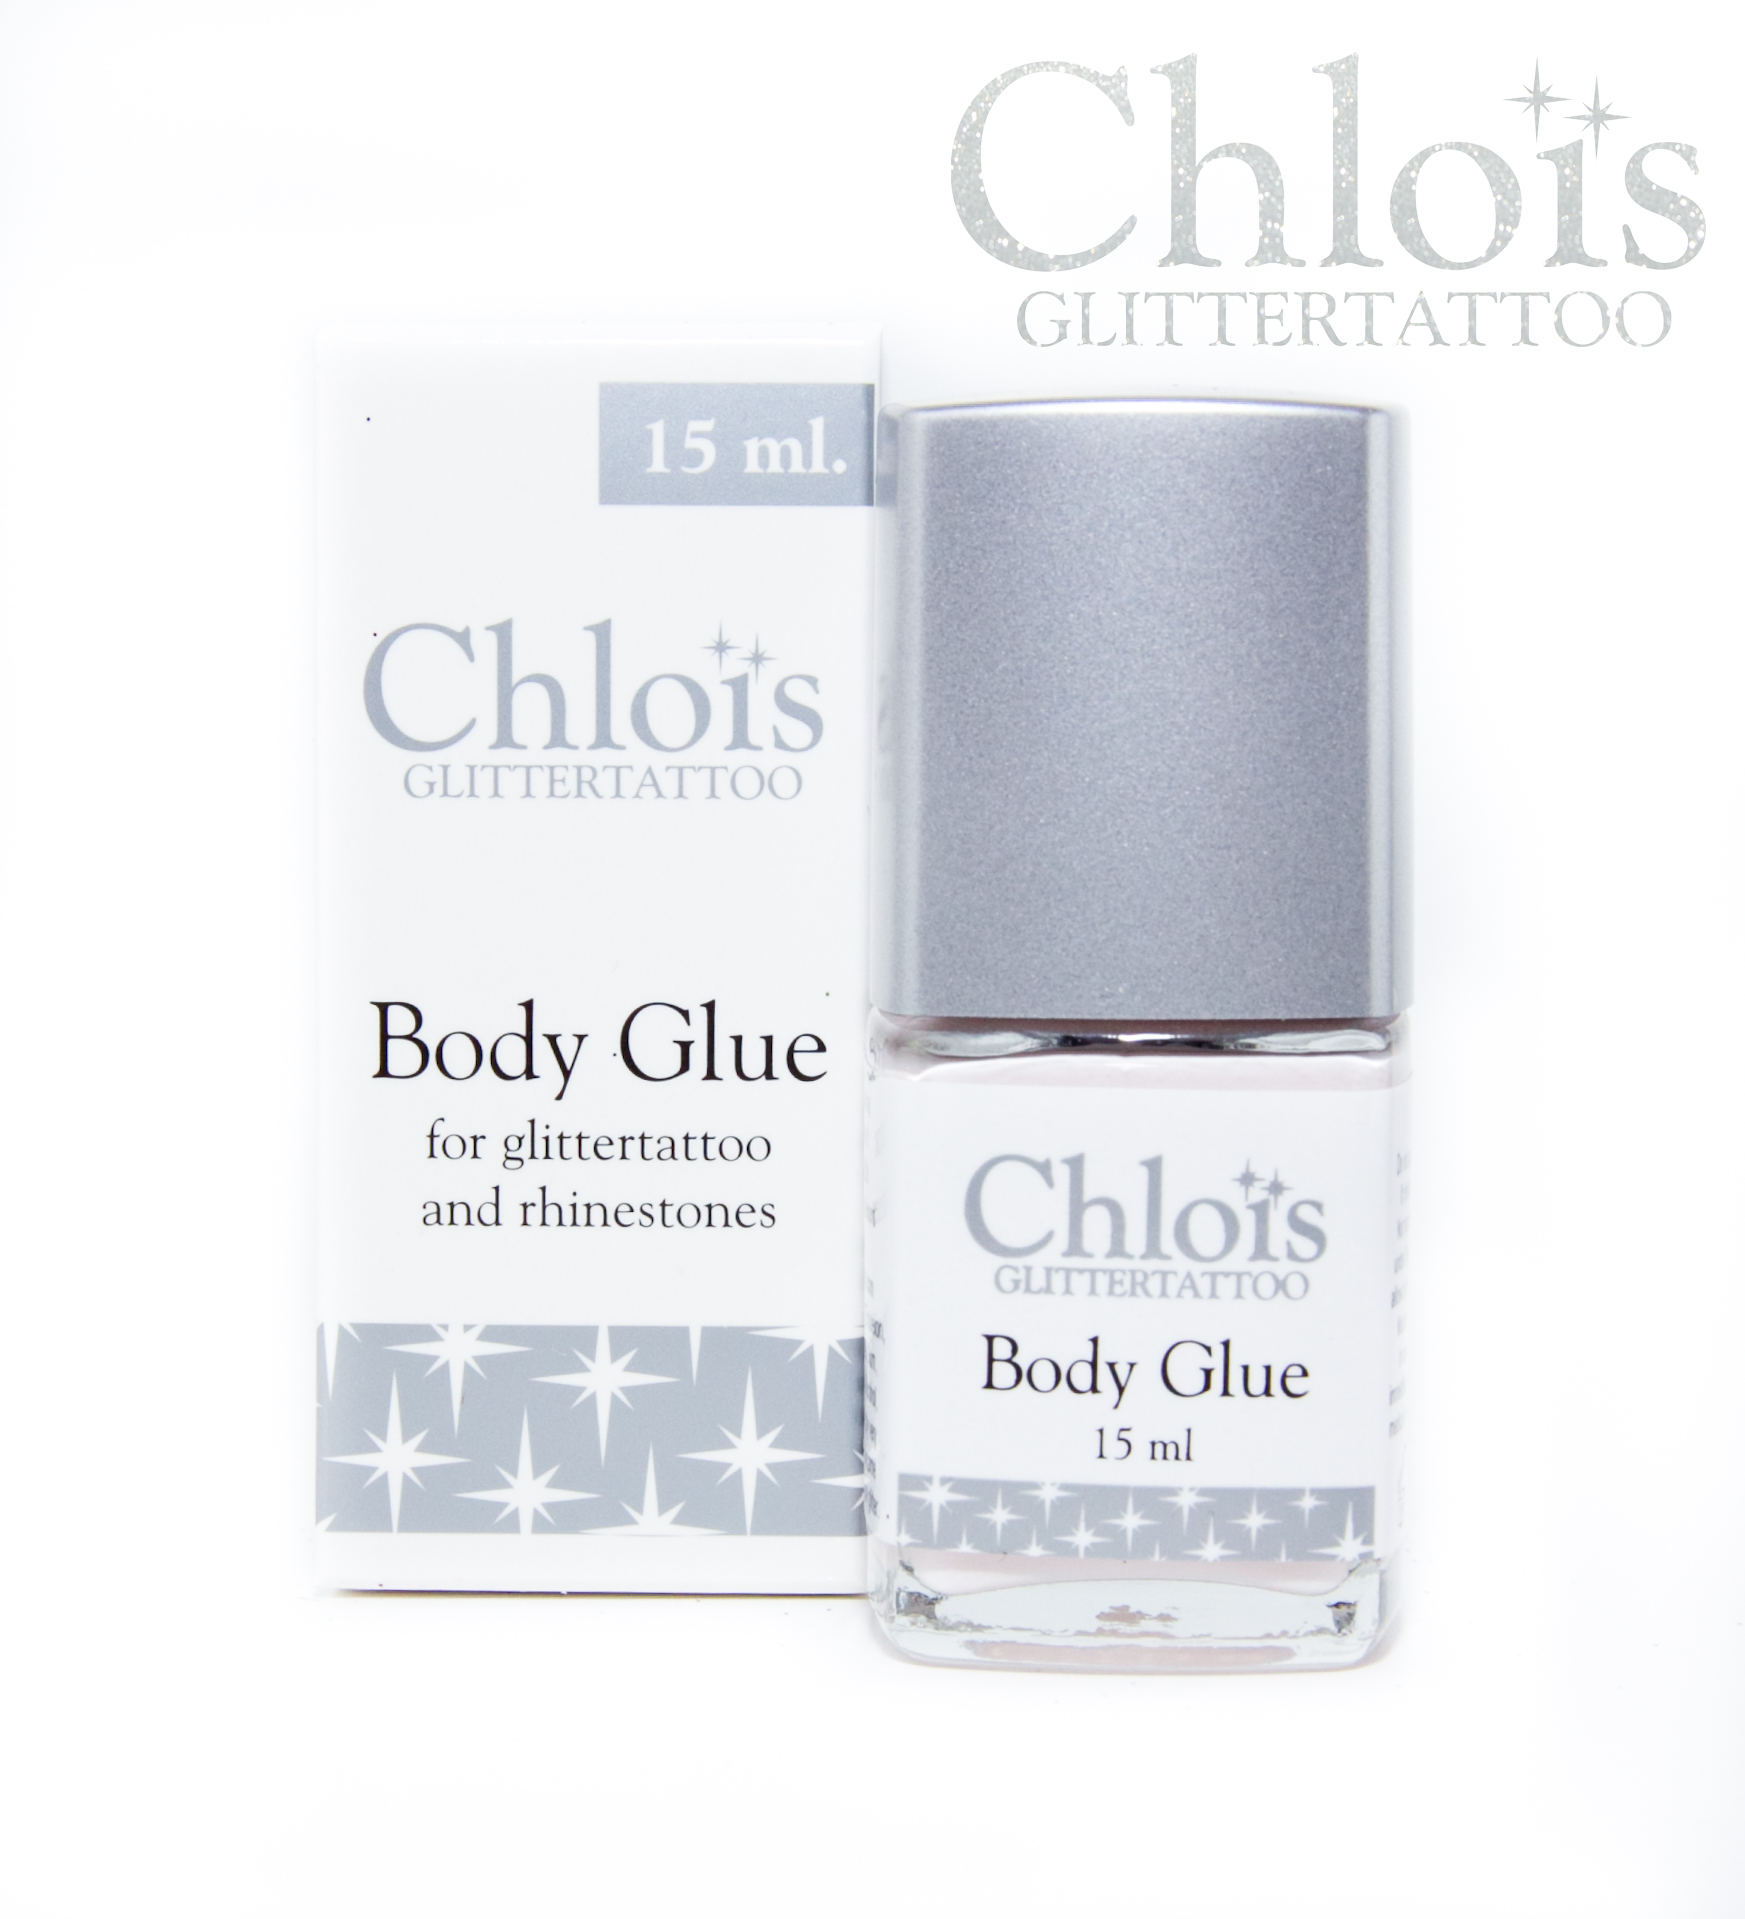 Chloïs Body Glue - 15 ml